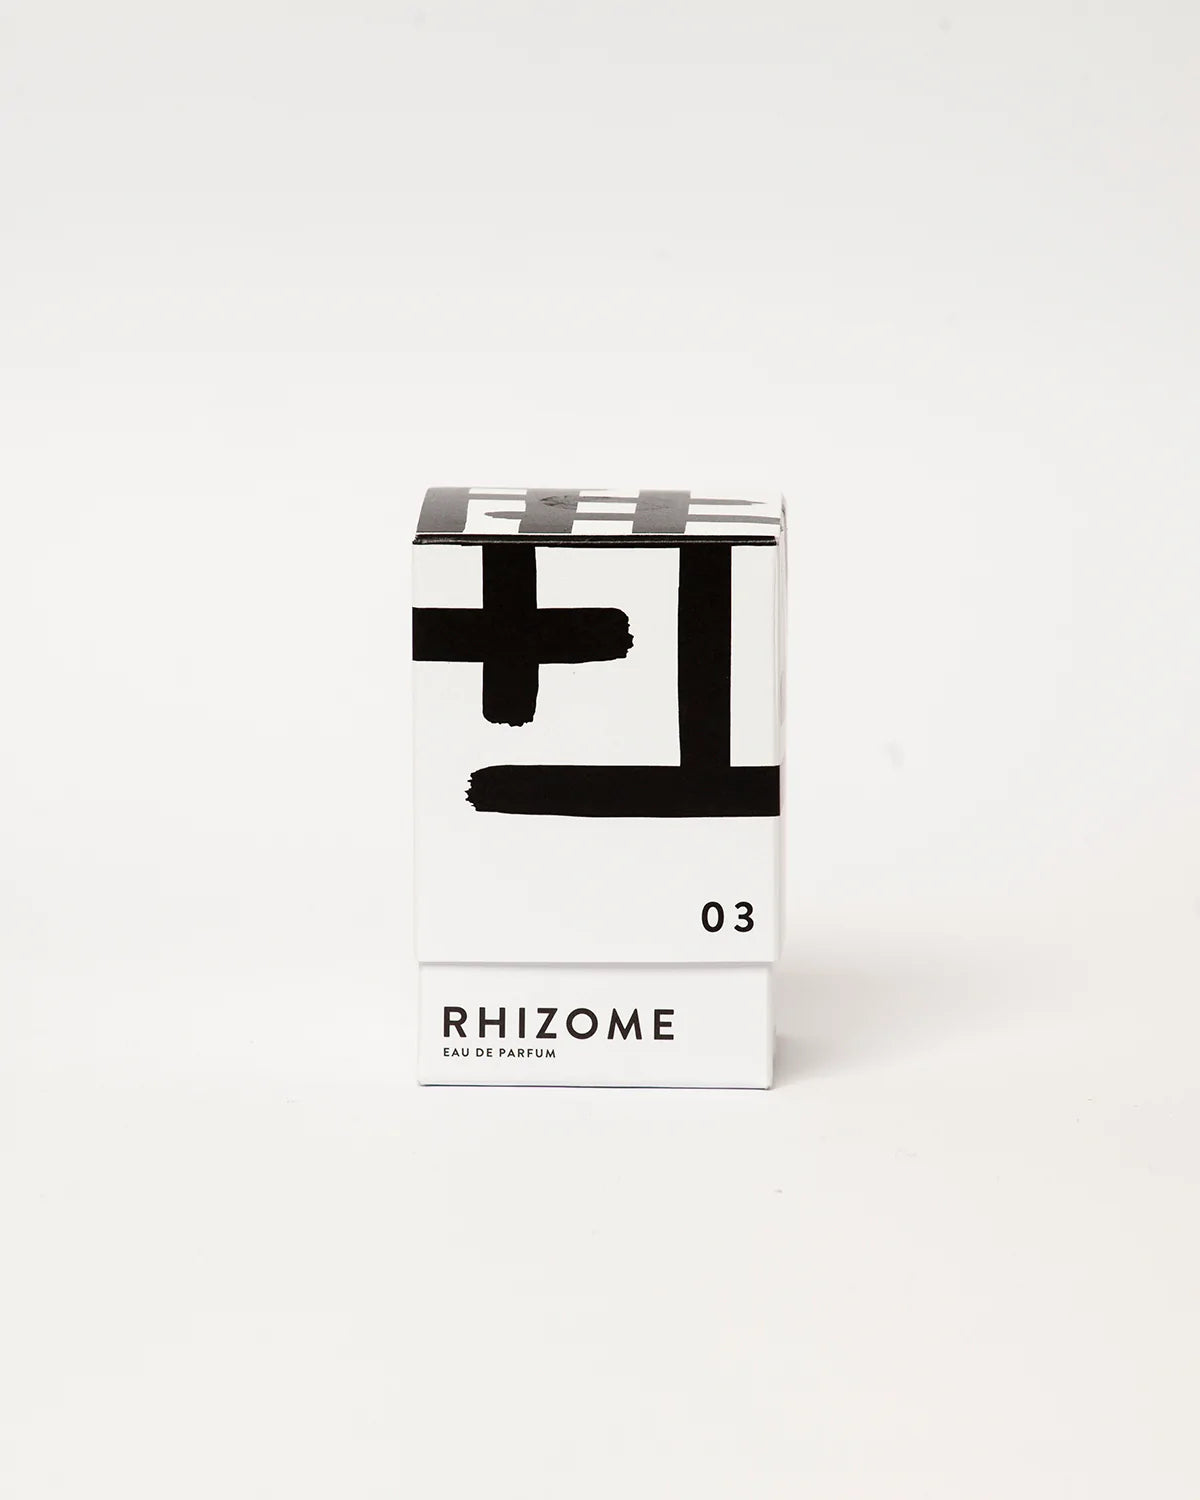 RHIZOME 03 is a net and vigorous eau de perfume for men and women.